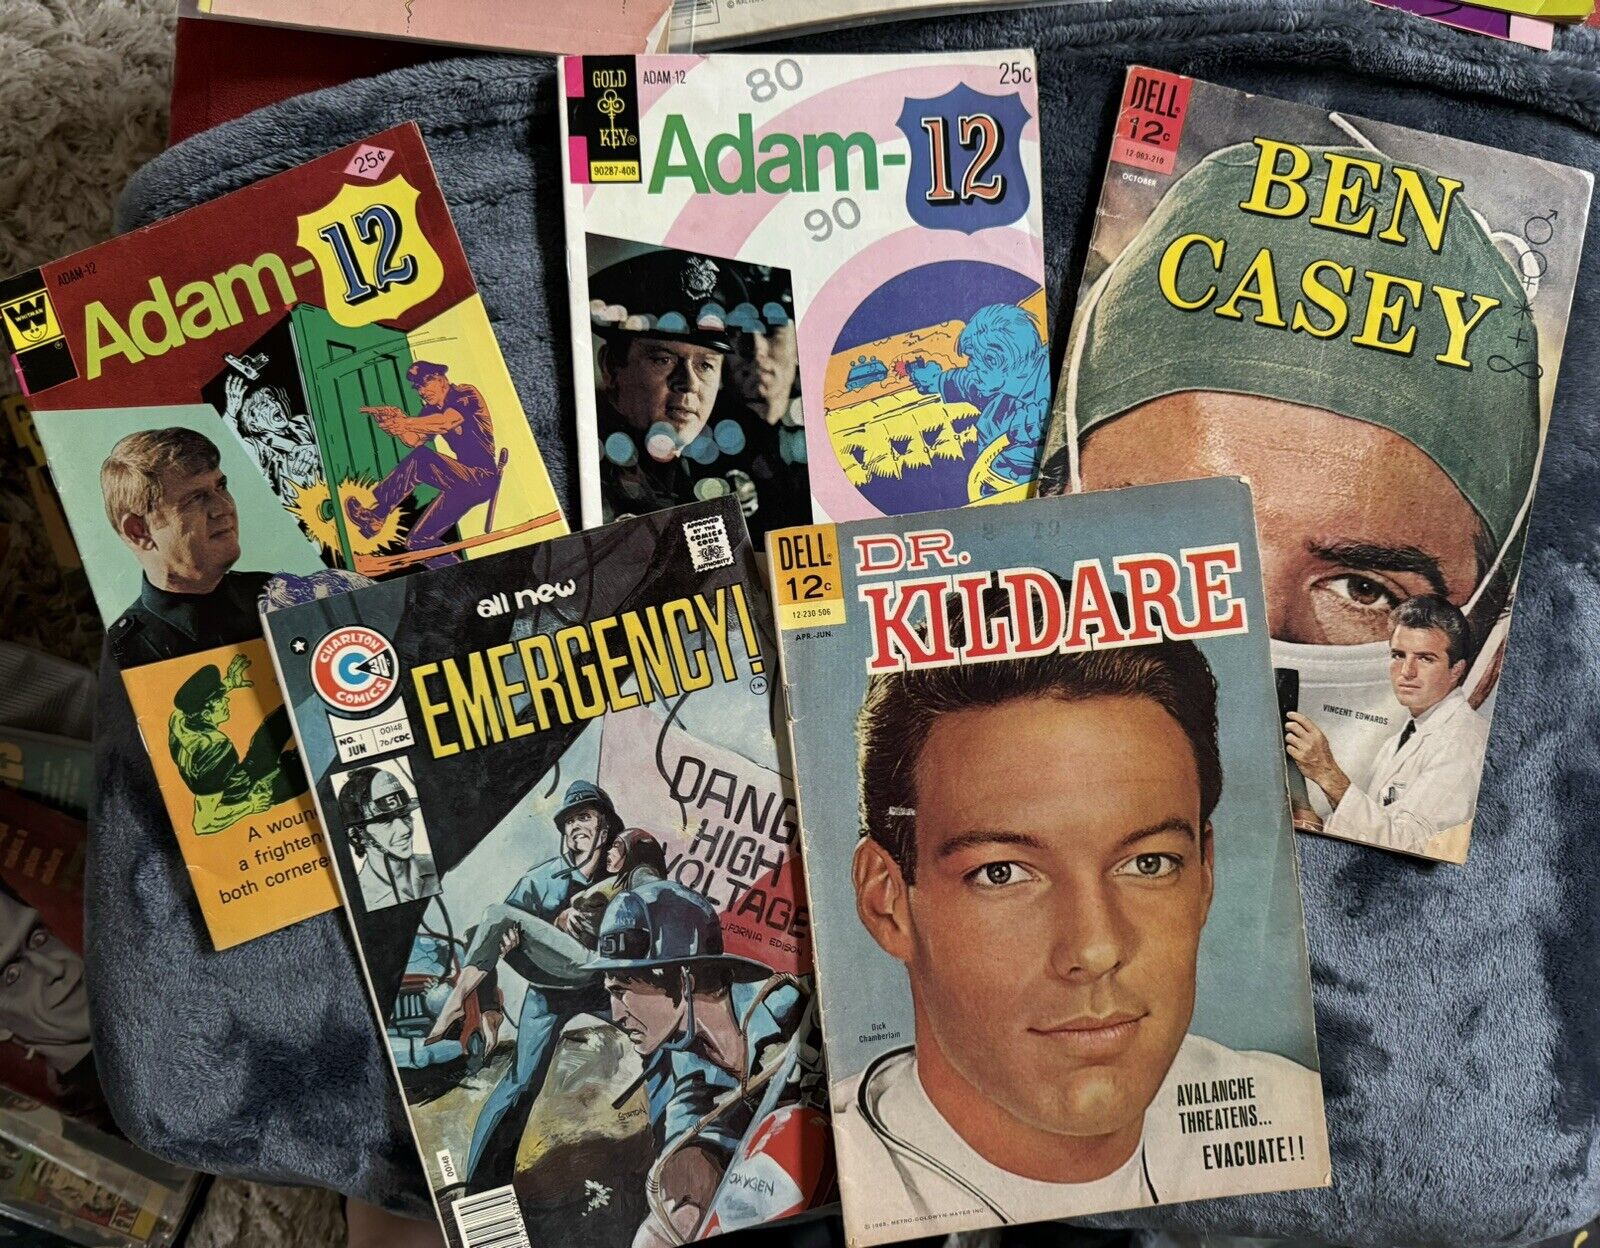 5 comic books First Responders Dr Kildare, Ben Casey, Adam 12, Emergency